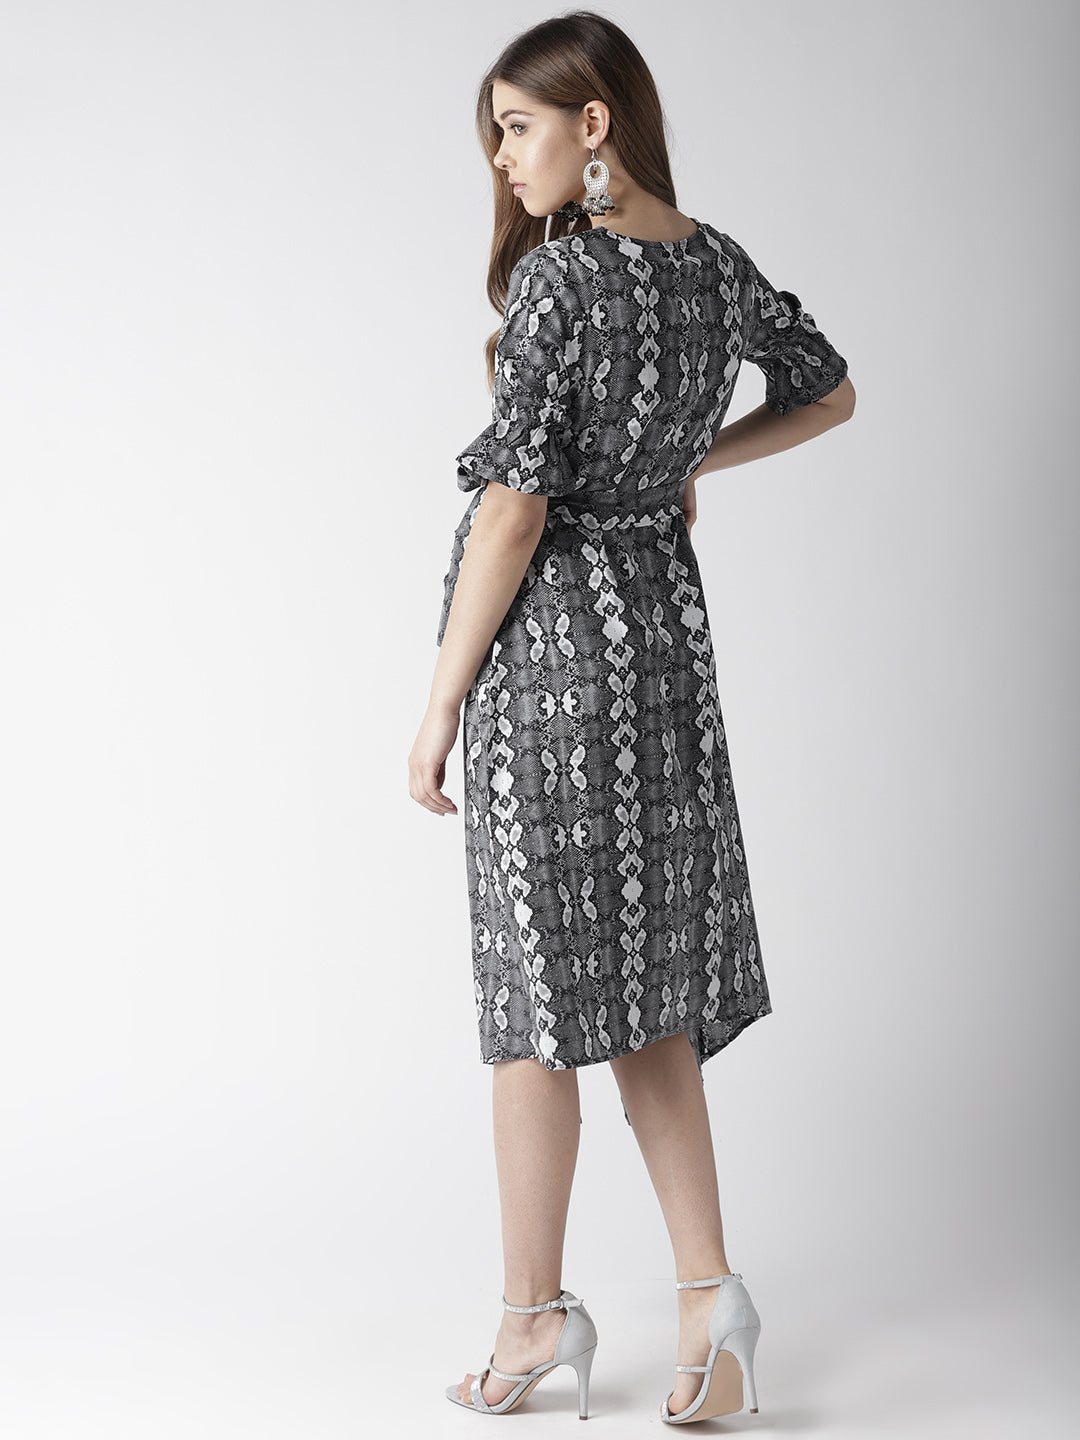 Women's Black and White Snake Print Asymmetric Hemline Dress - StyleStone